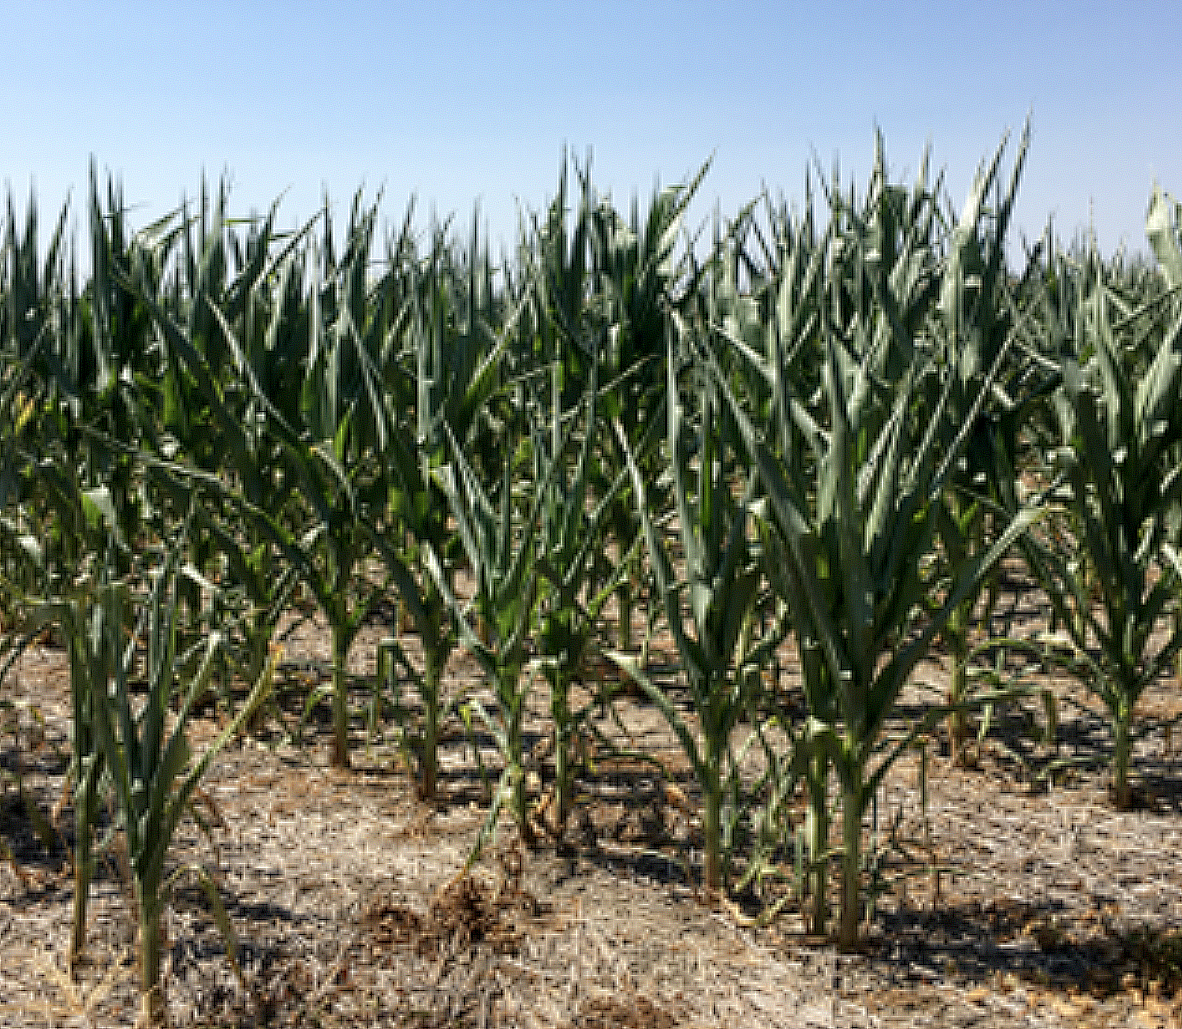 corn showing symptoms of drought stress